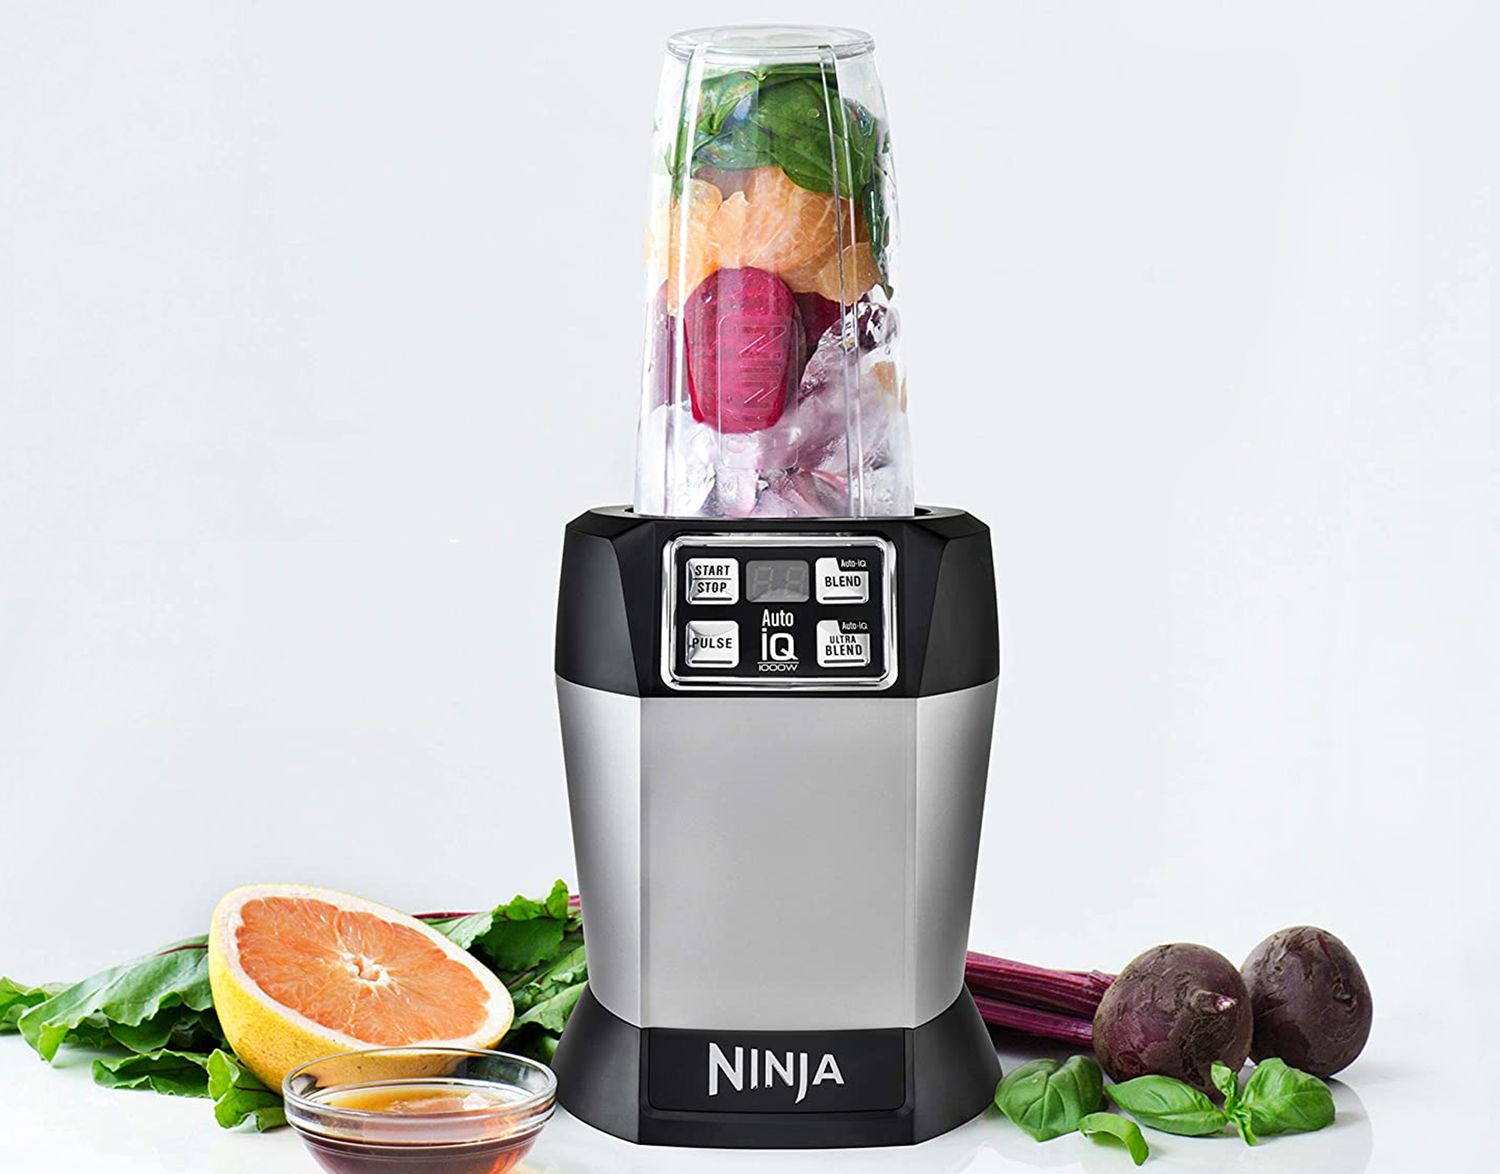 nutri ninja blender with fresh vegetables and fruit